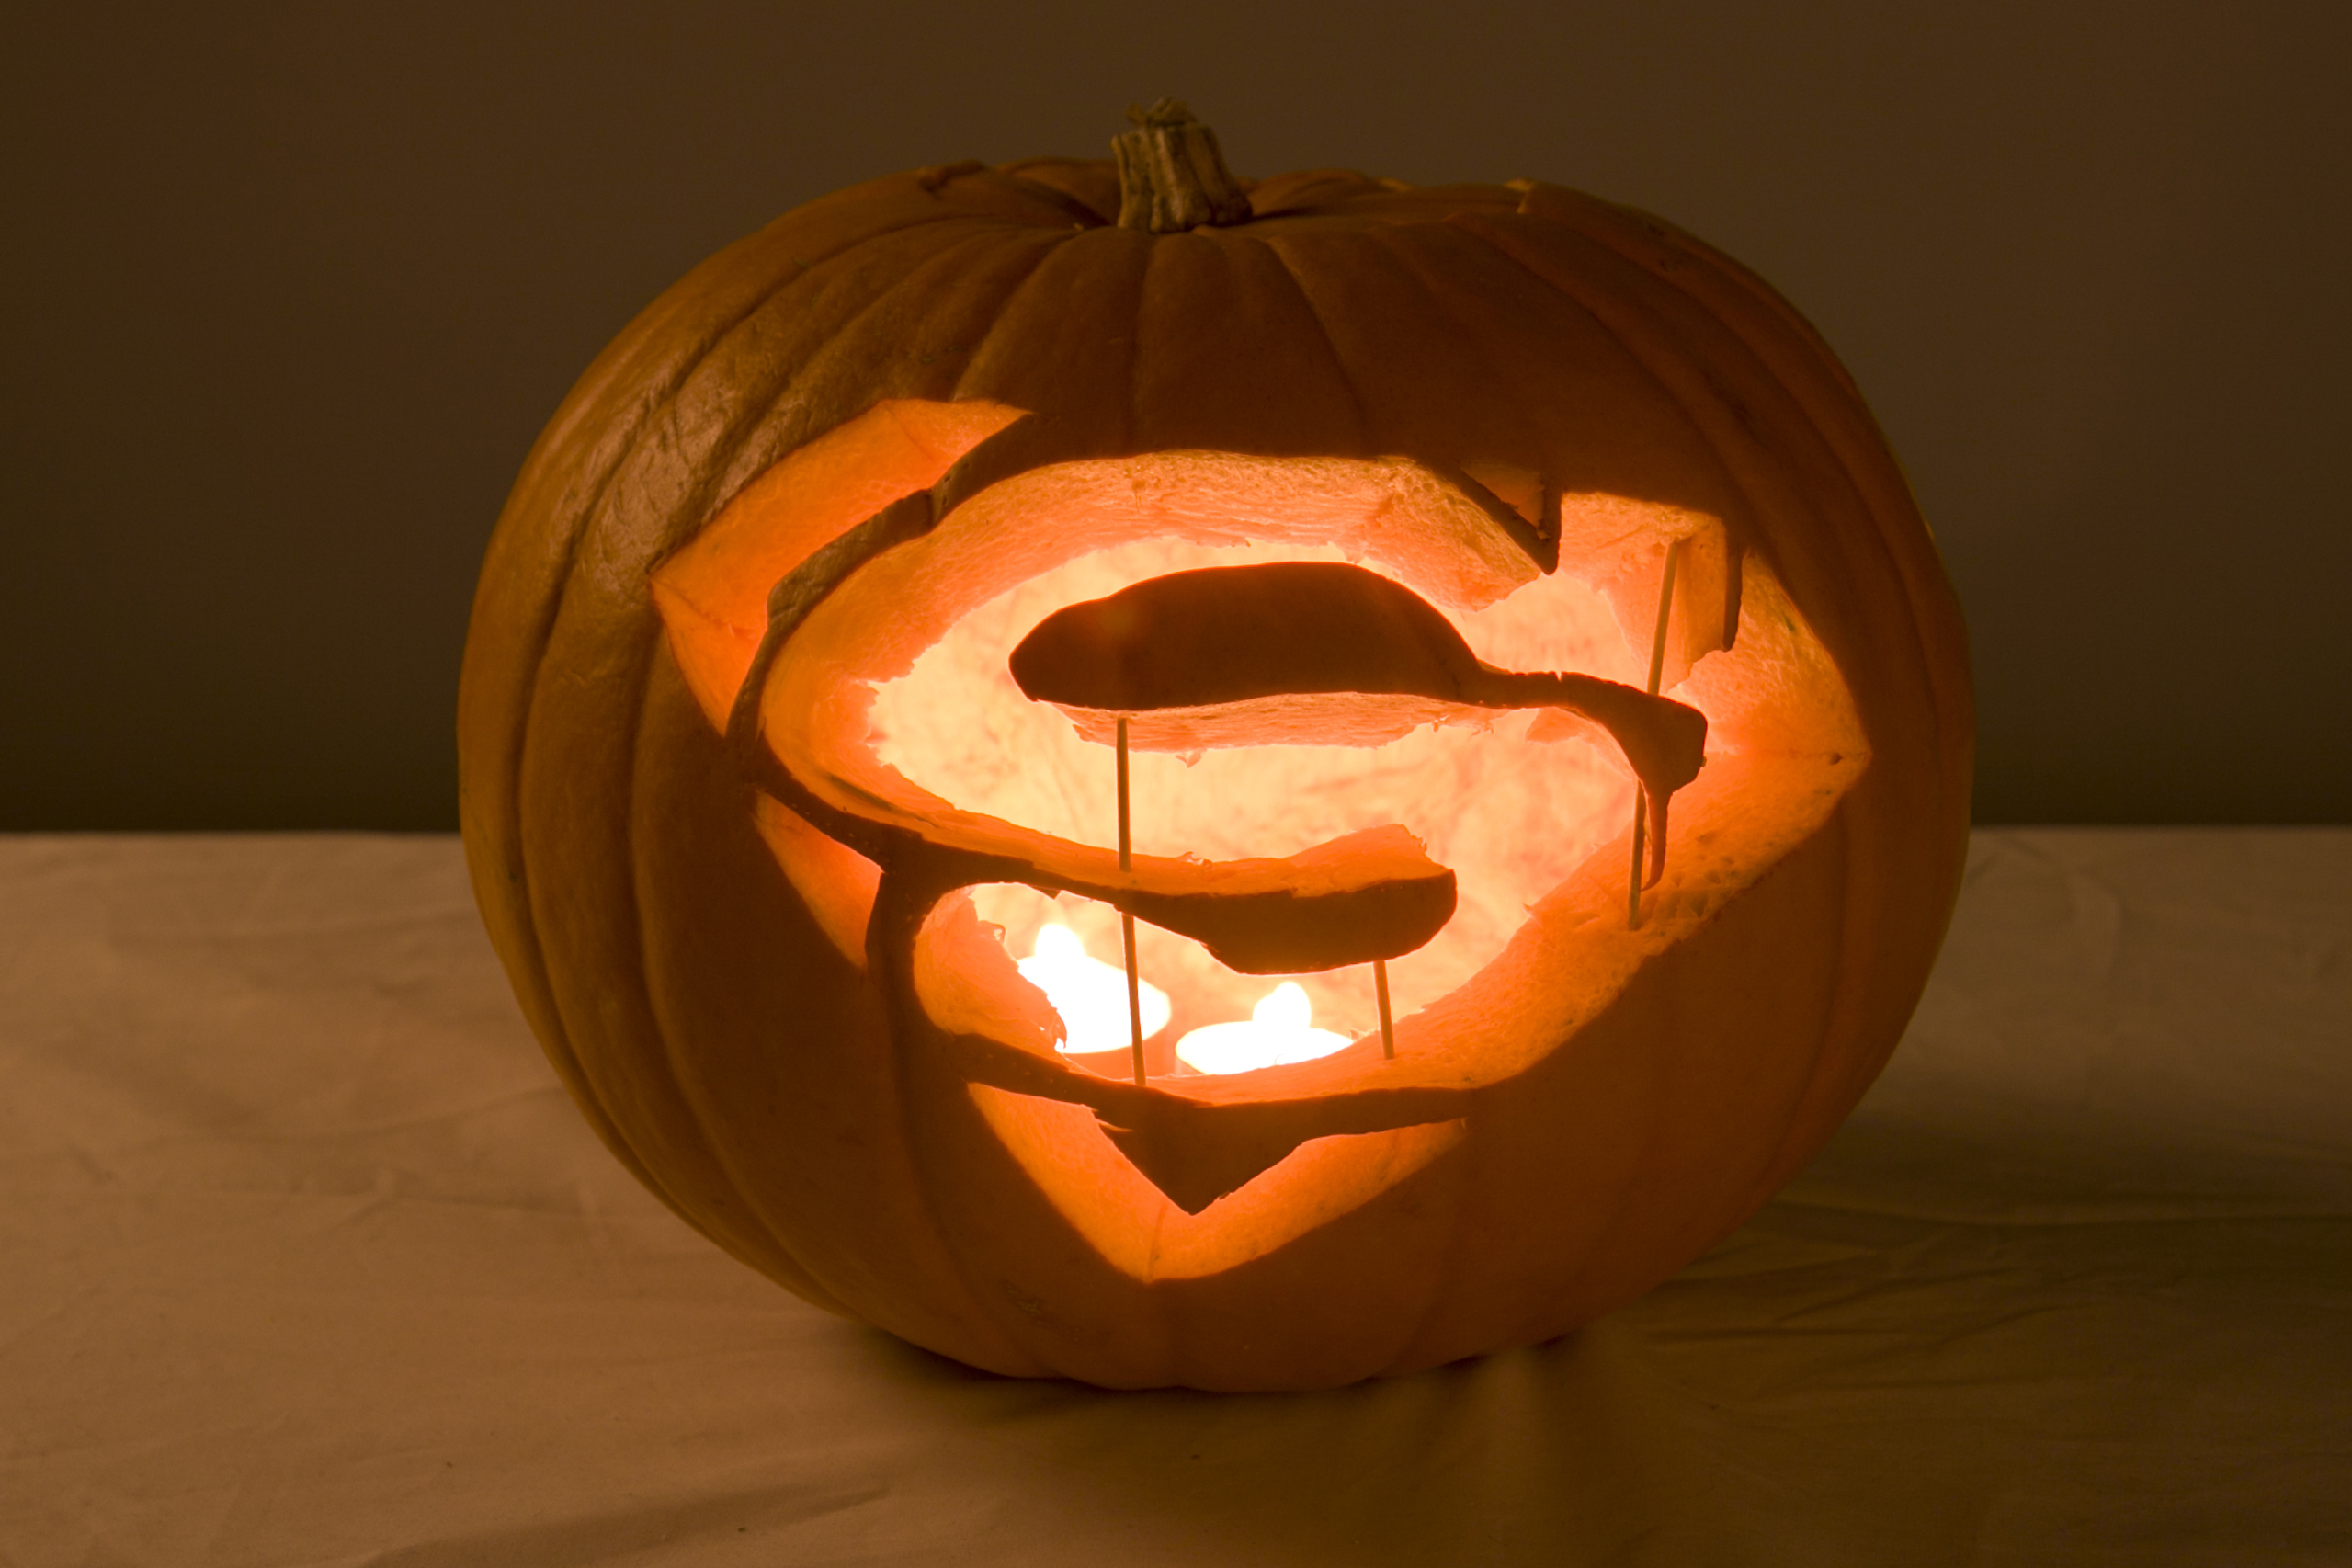 superman pumpkin carving patterns